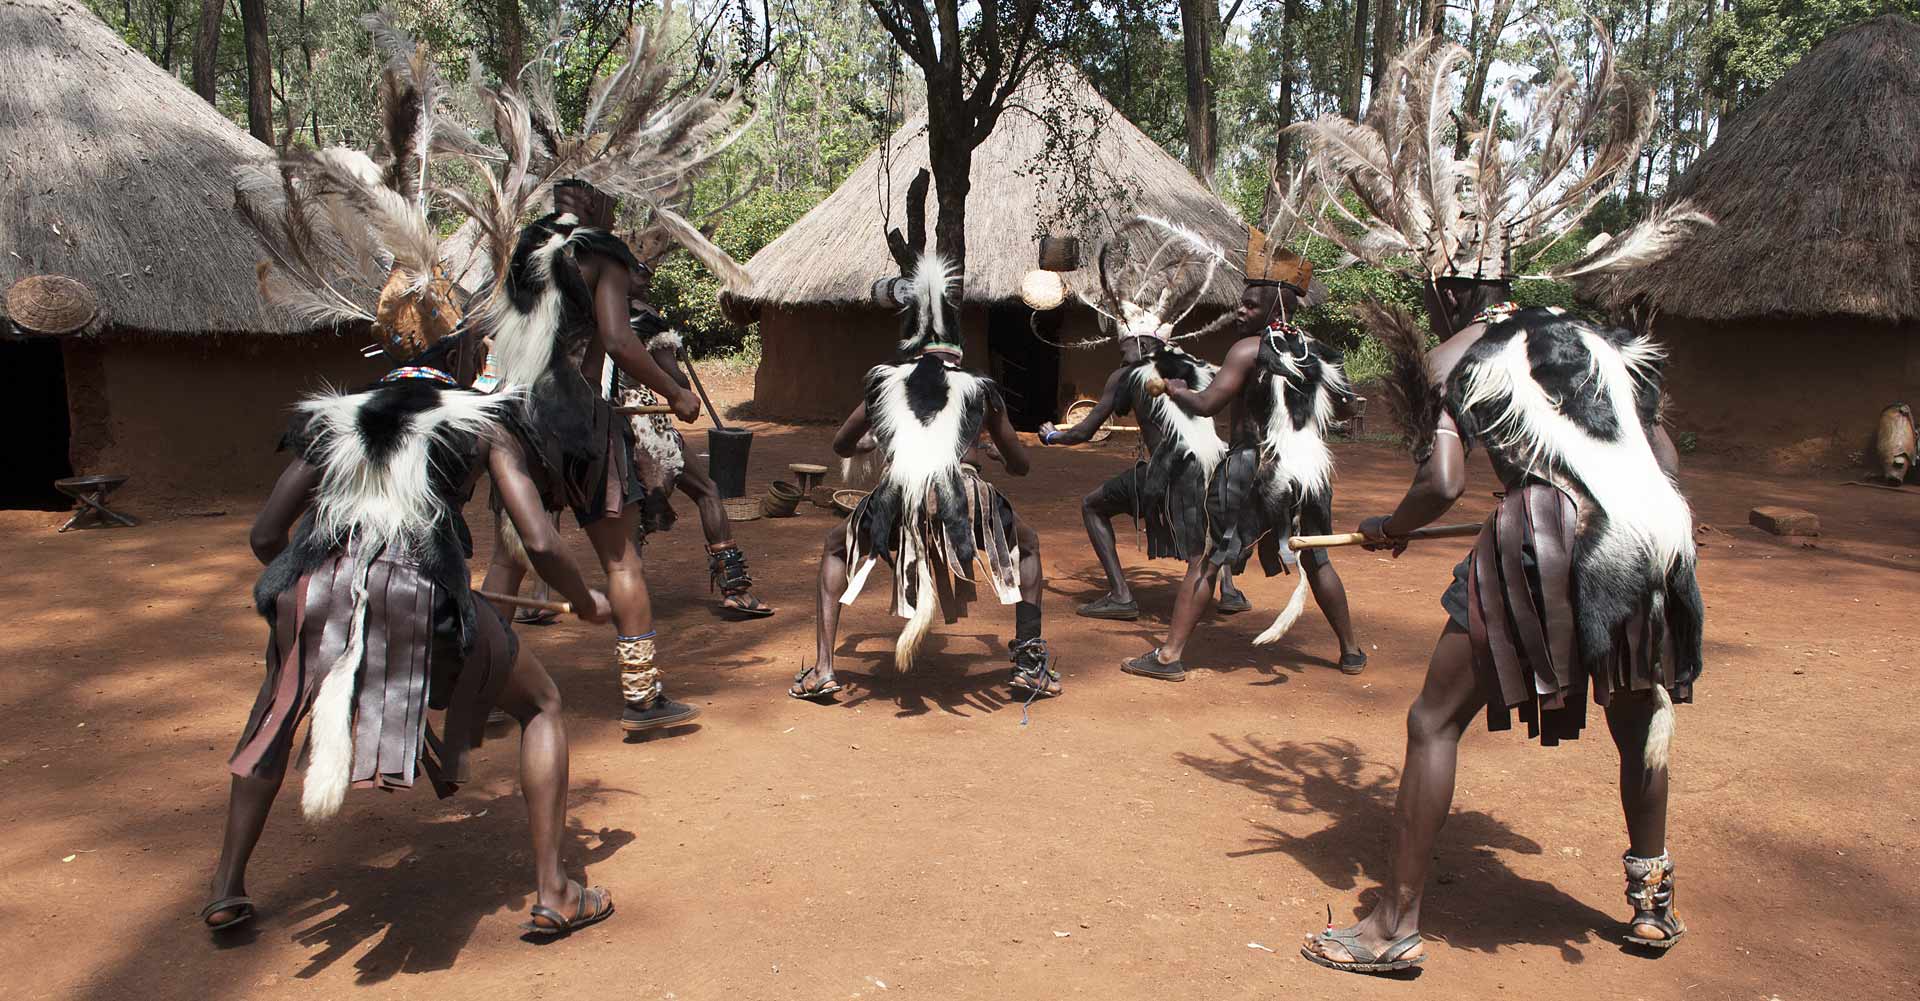 The Bomas of Kenya - a fascinating insight into Kenya's cultural heritage